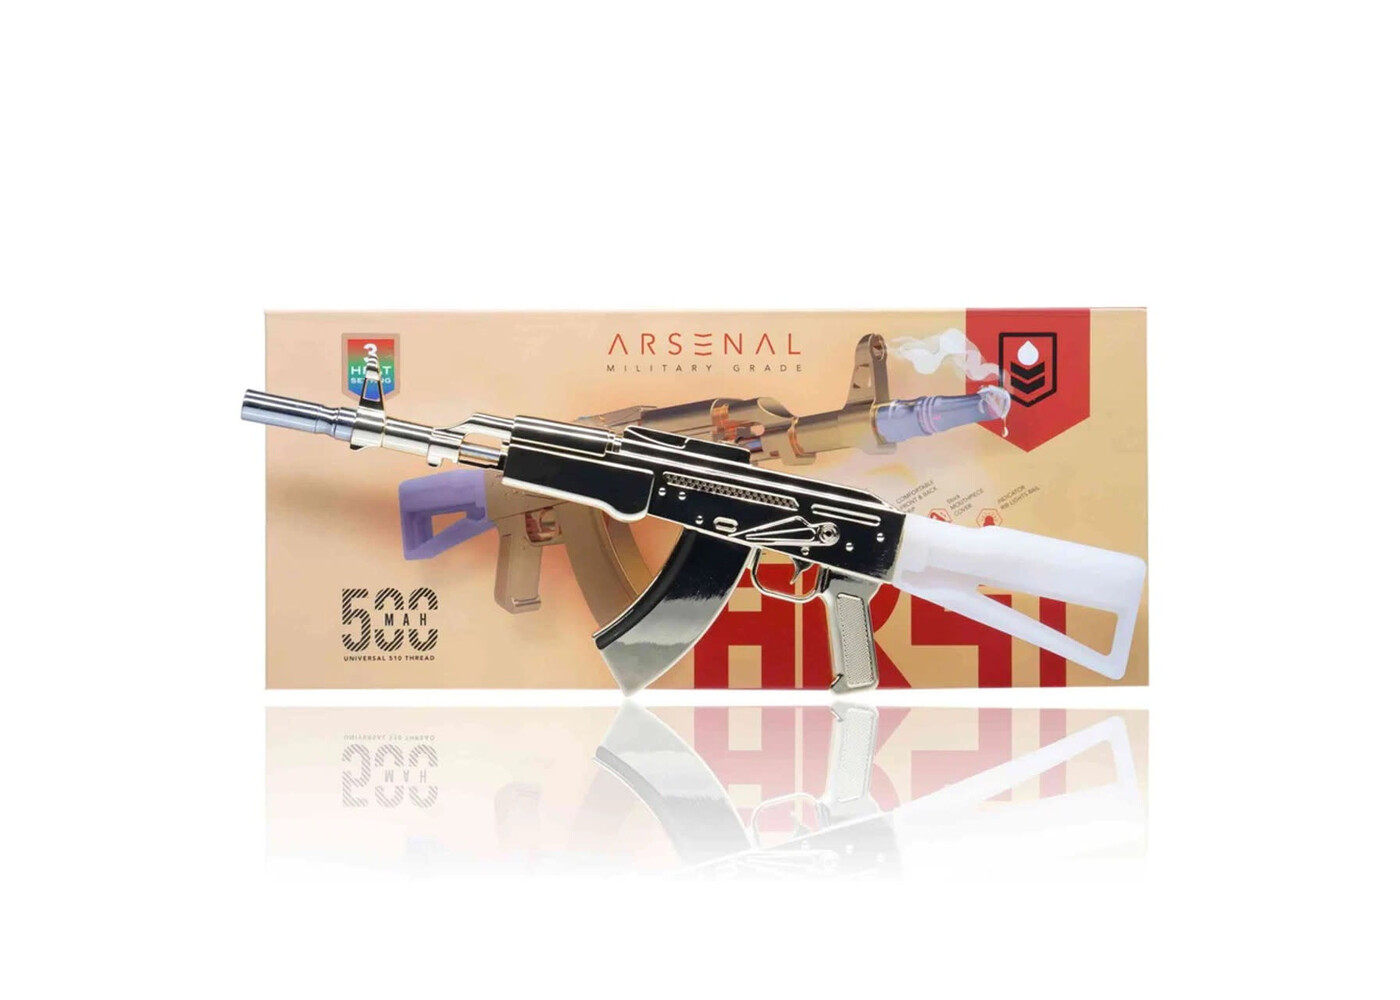 Arsenal Gear Arsenal gear AK47 Nectar Collector